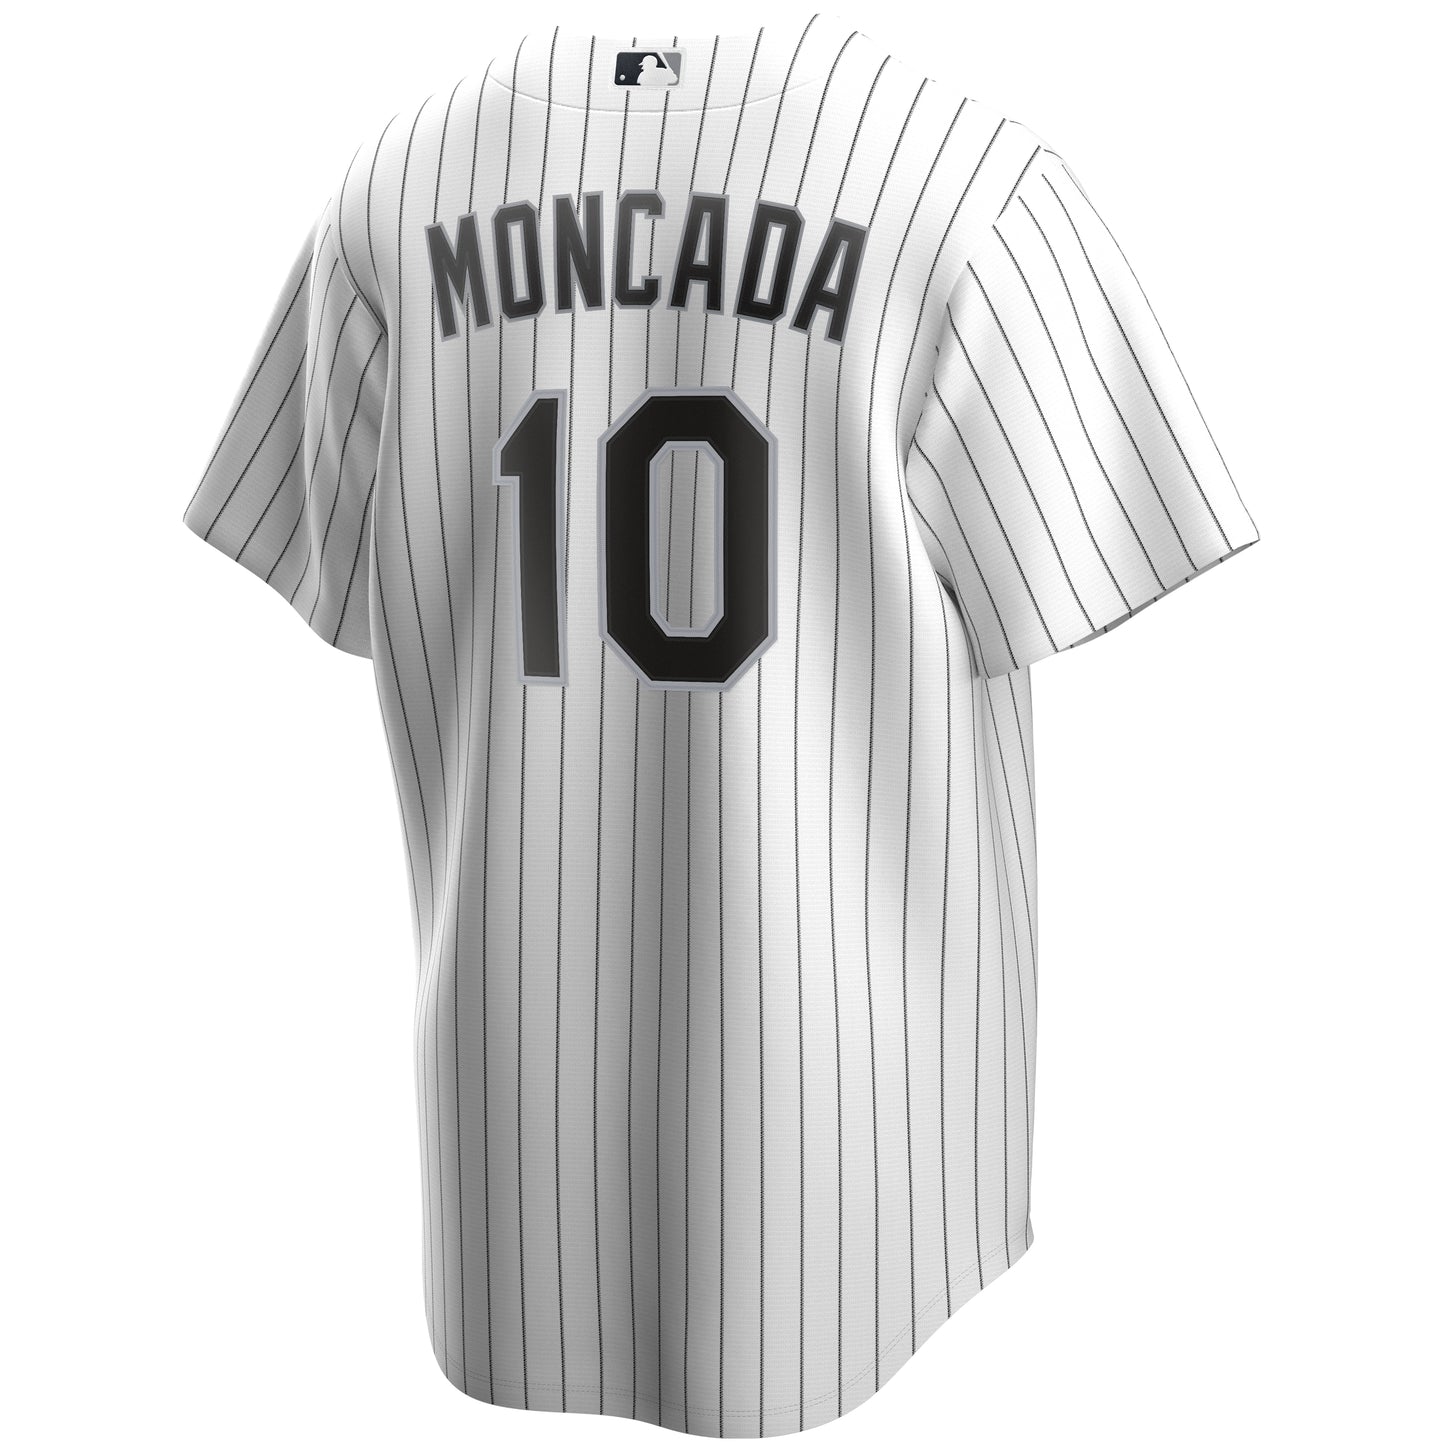 NIKE Men's Yoan Moncada Chicago White Sox White Home Replica Jersey